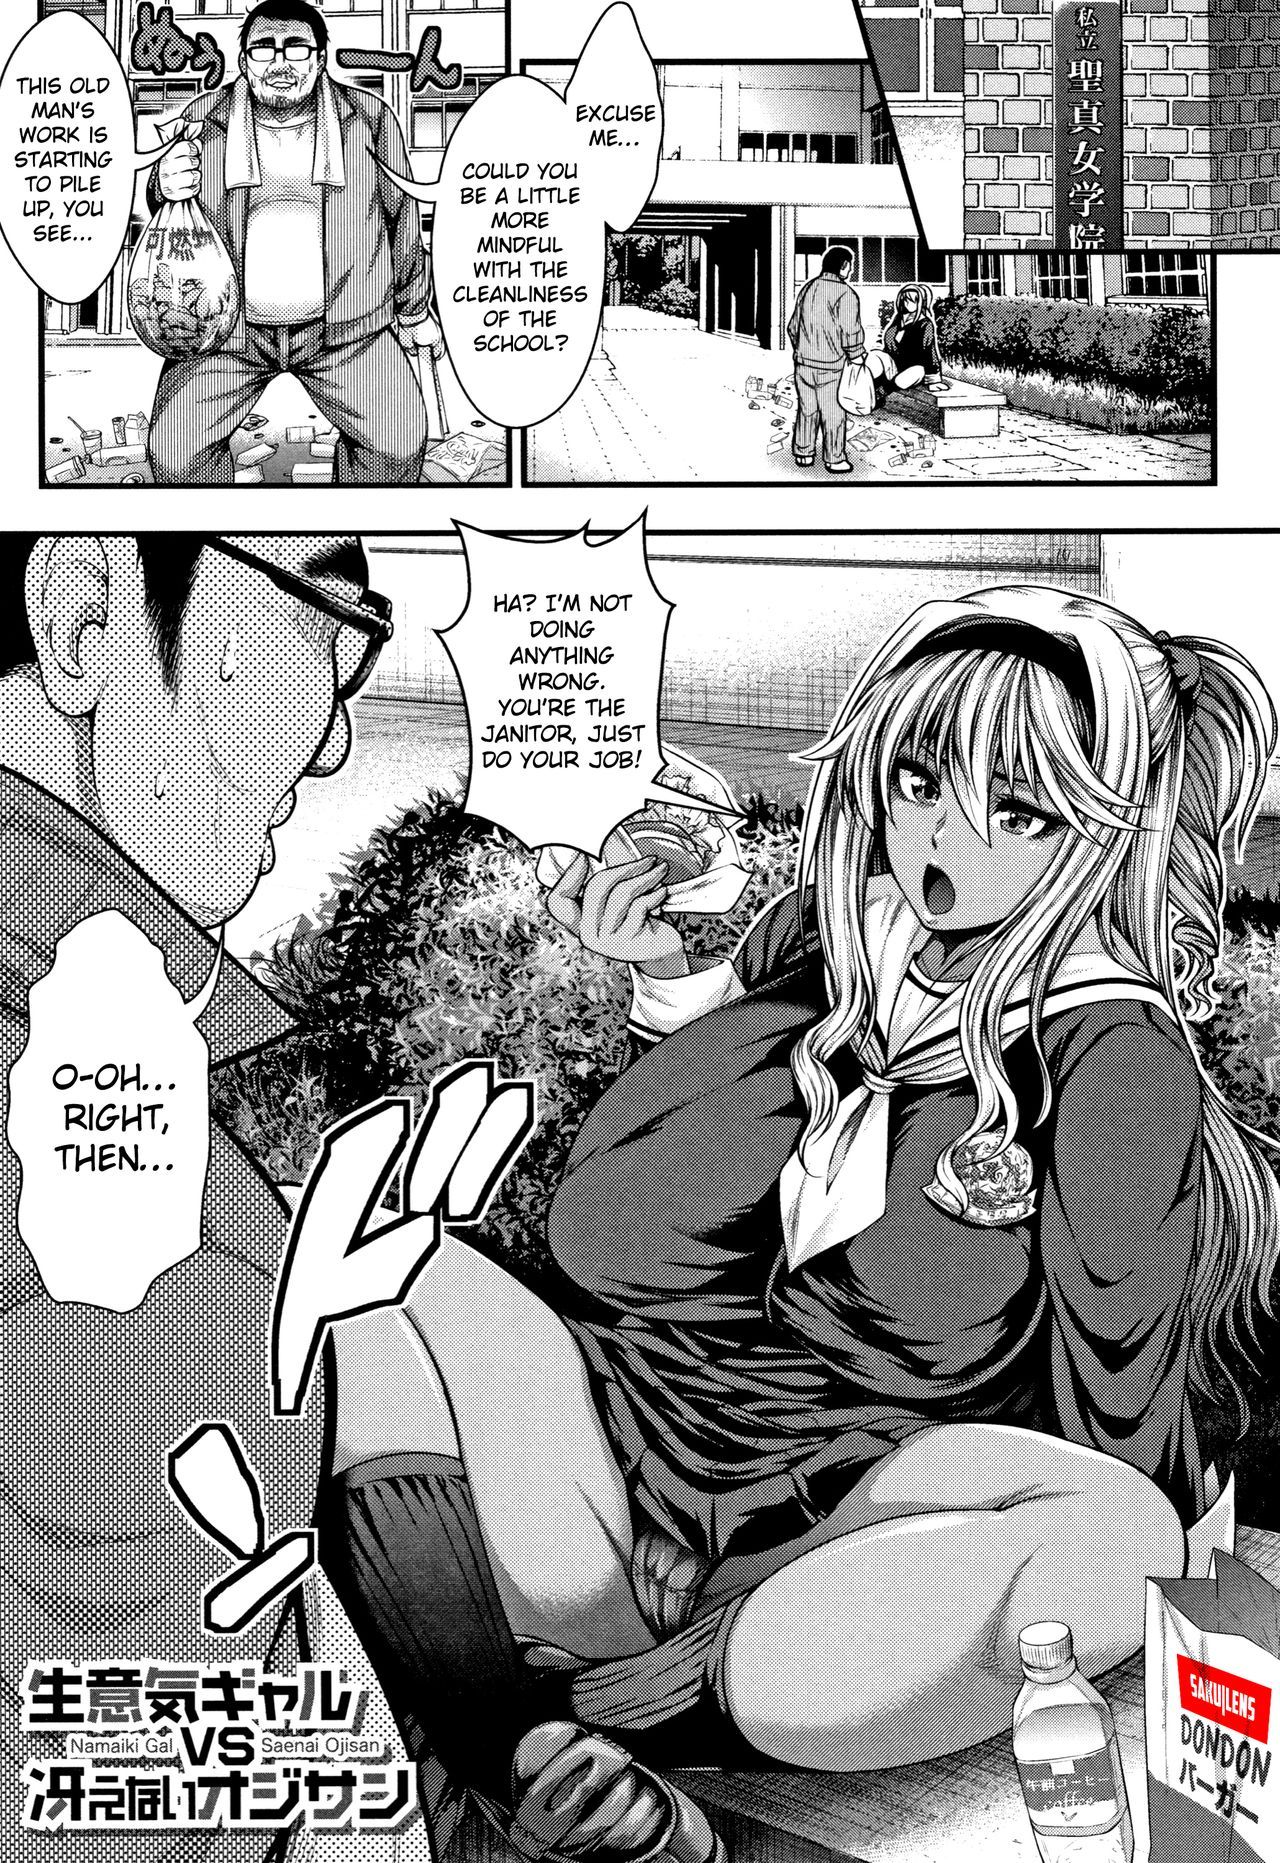 Namaiki Gal vs. Saenai Ojisan by "Taihei Tengoku" - #174095 - Read hentai Manga online for free at Cartoon Porn